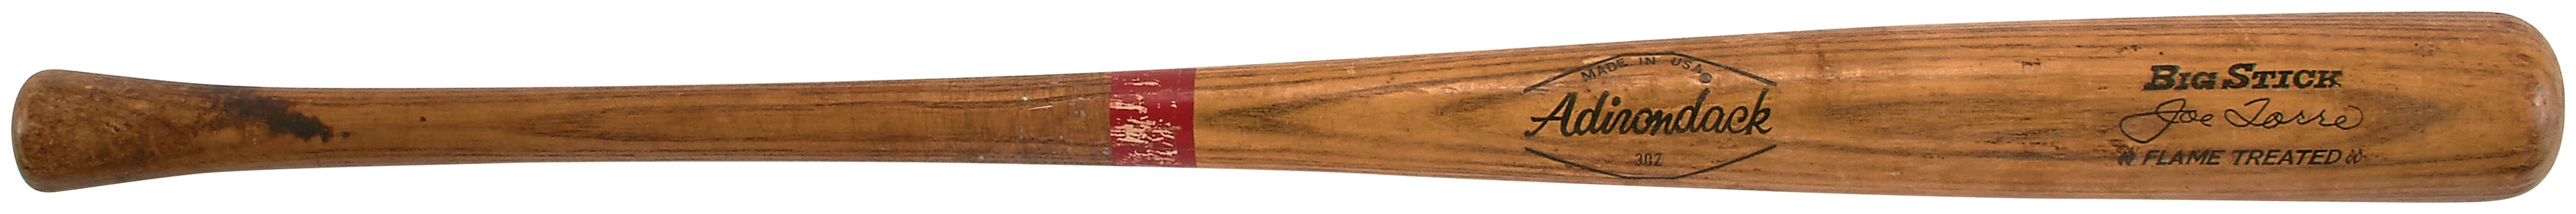 1971-74 Joe Torre Game Used Bat (PSA 9)